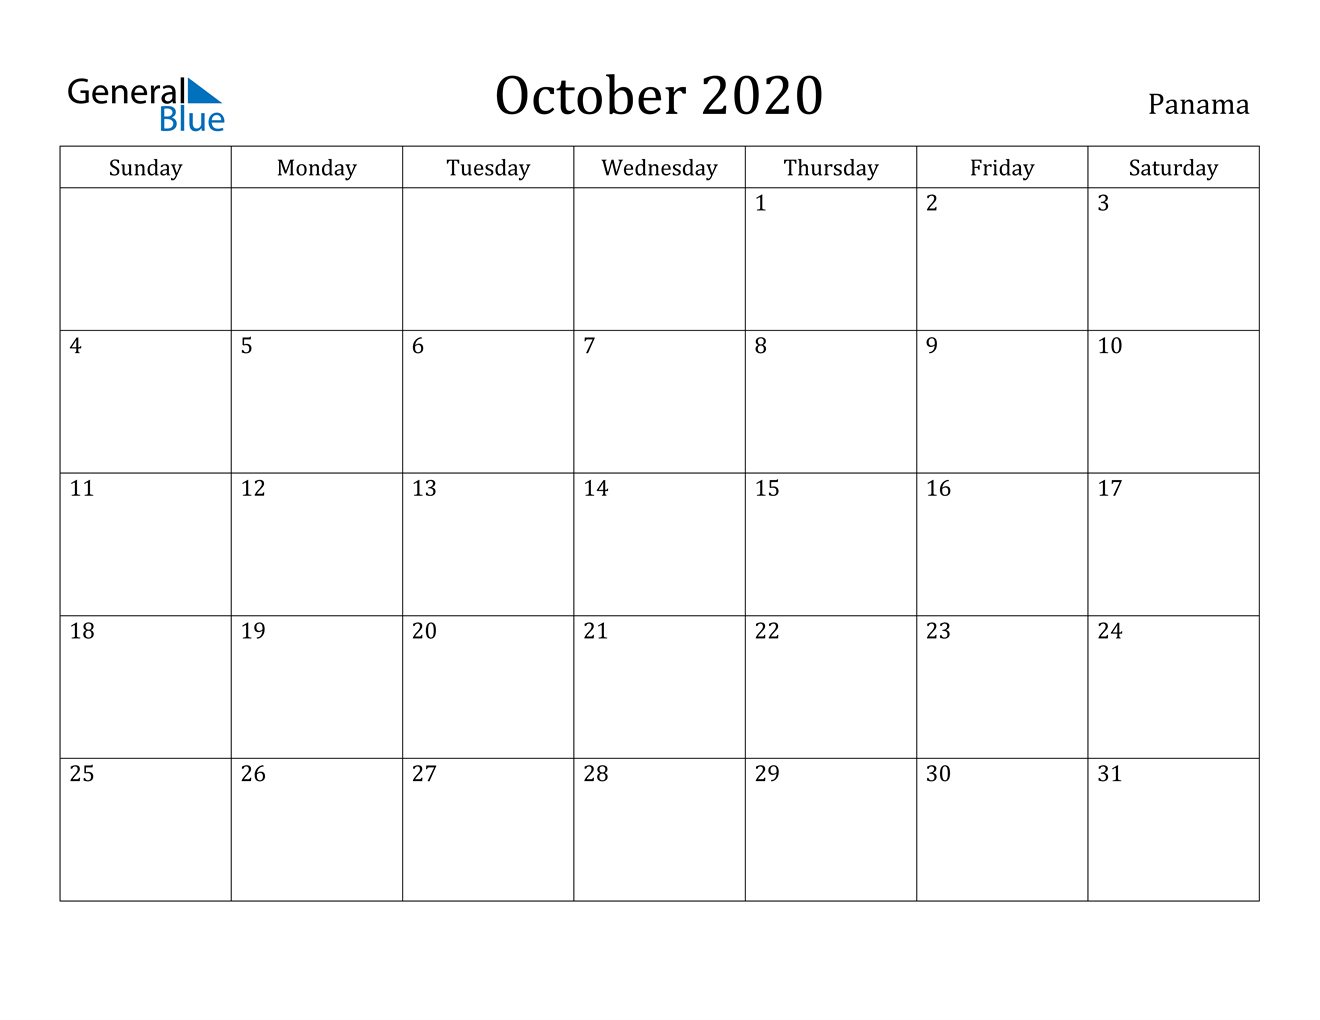 October 2020 Calendar - Panama